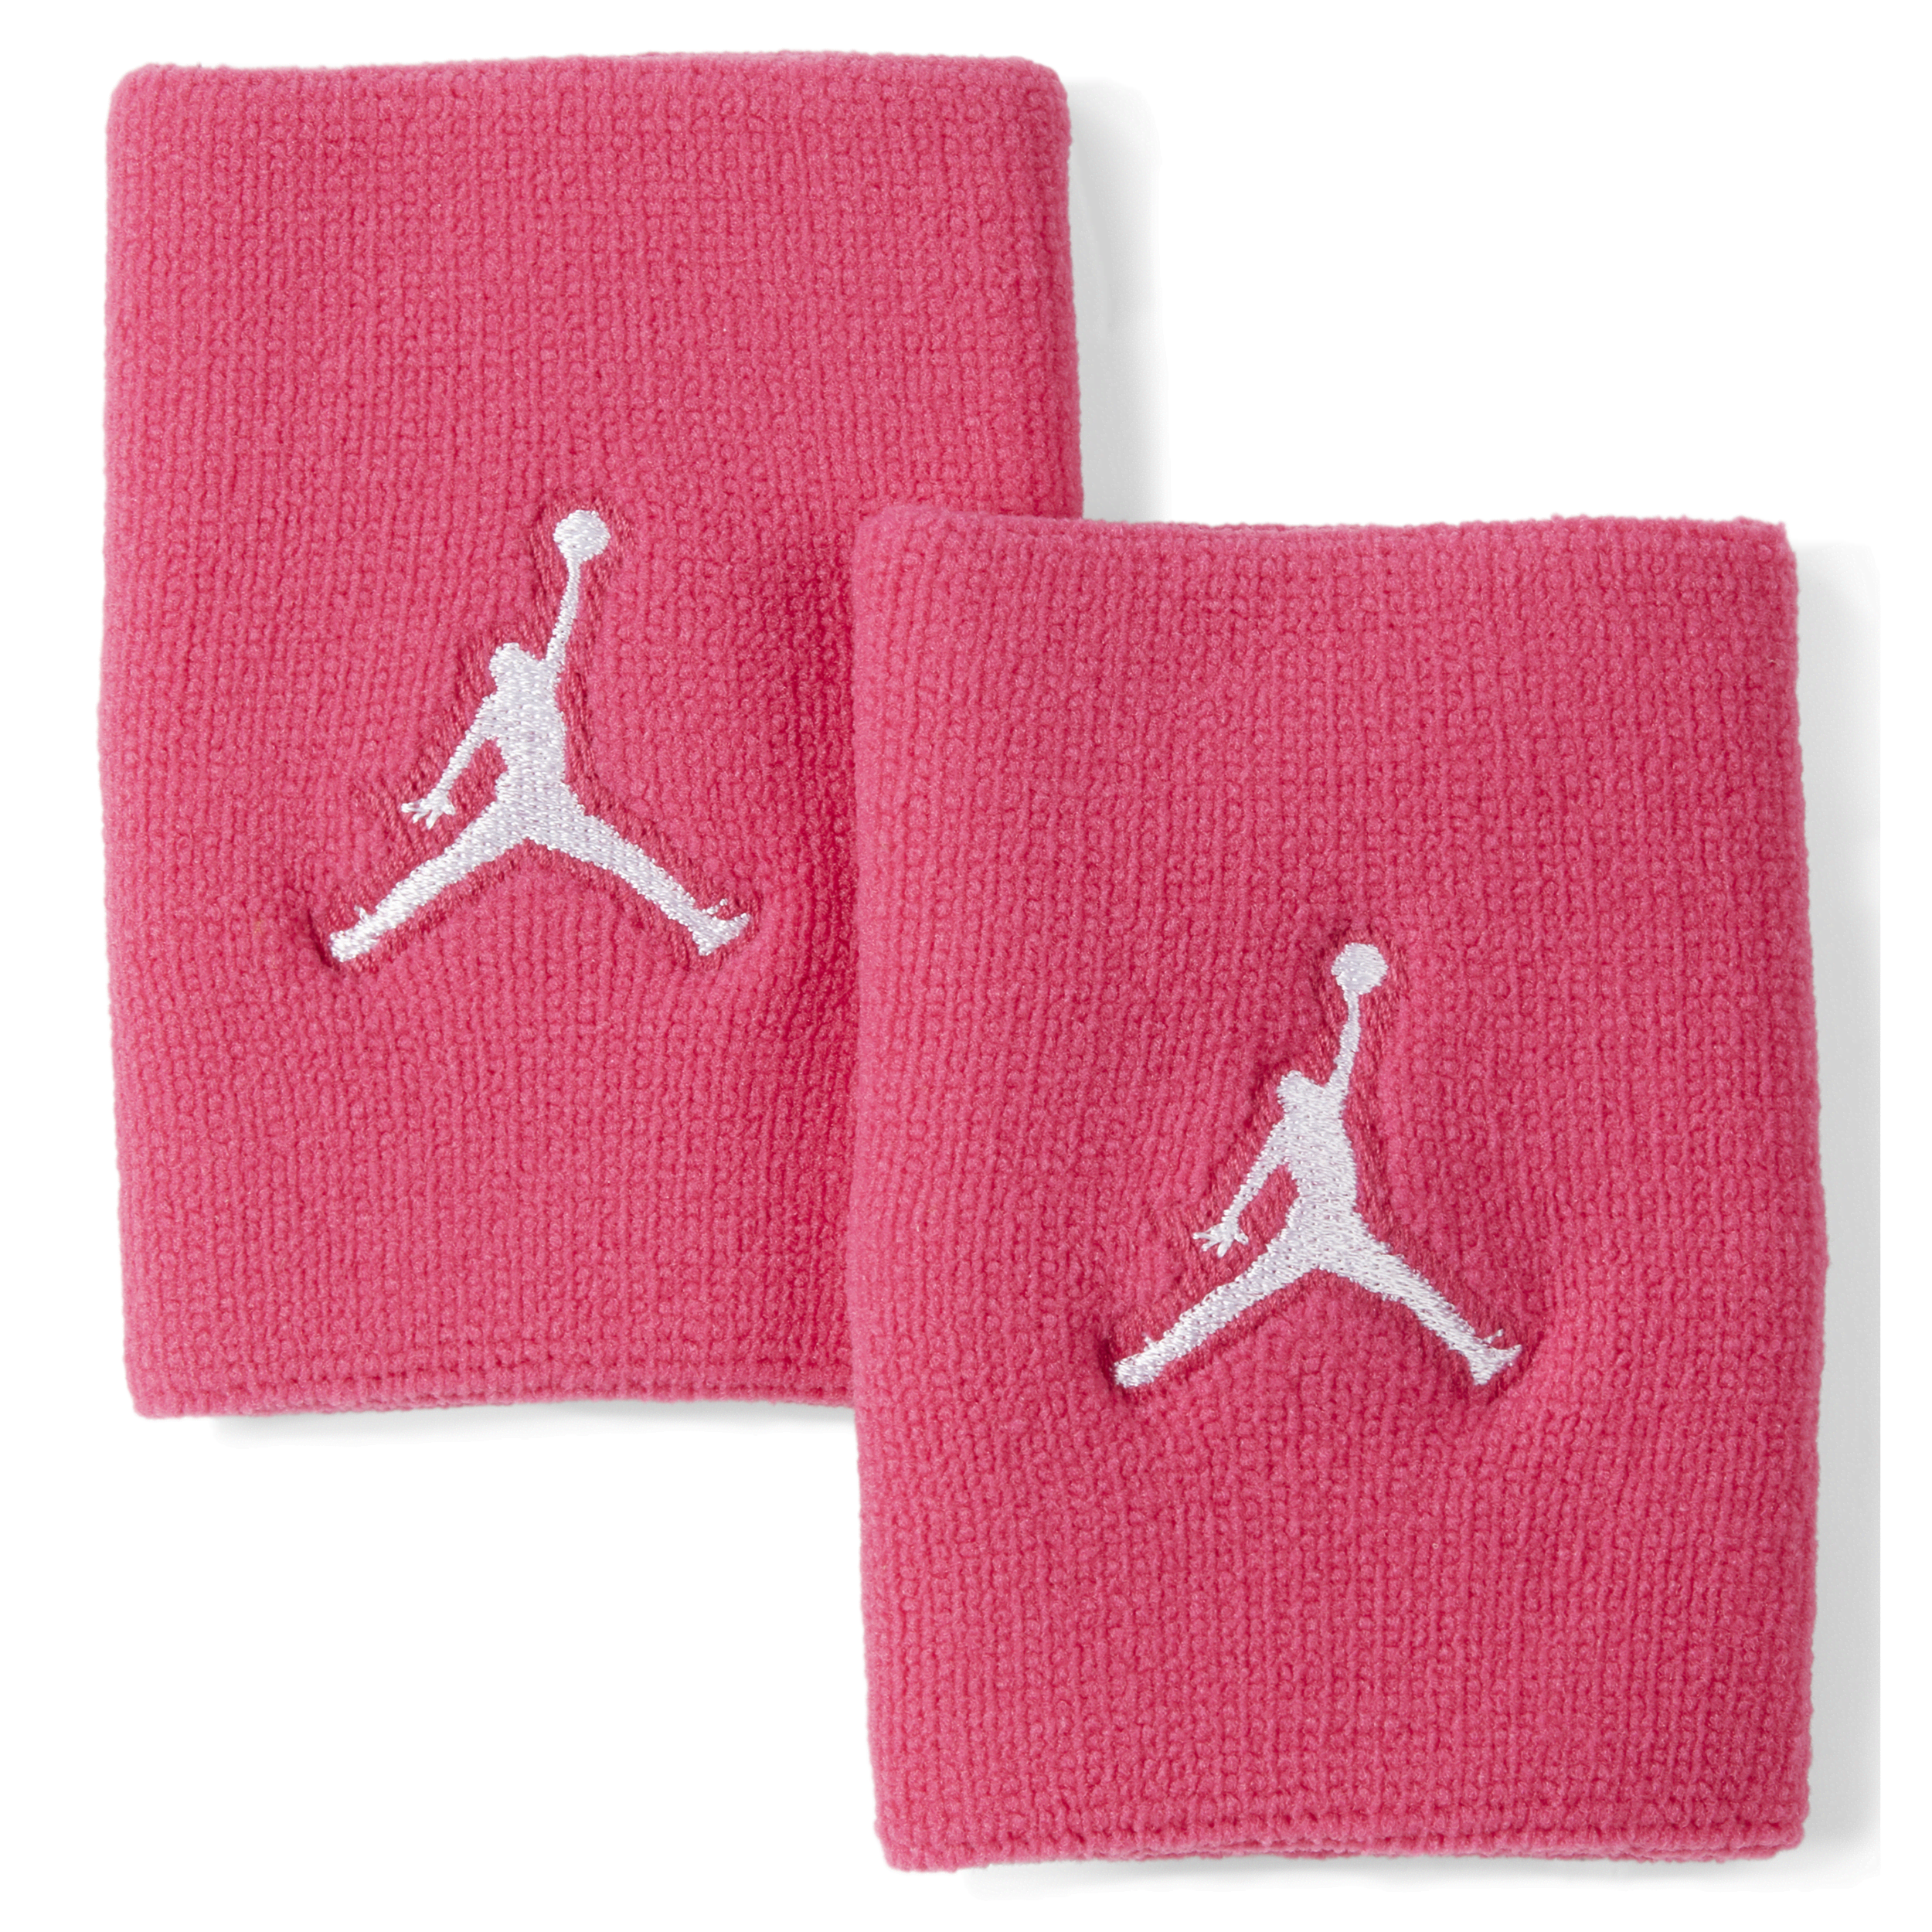 Jordan Jumpman Wristbands In Pink